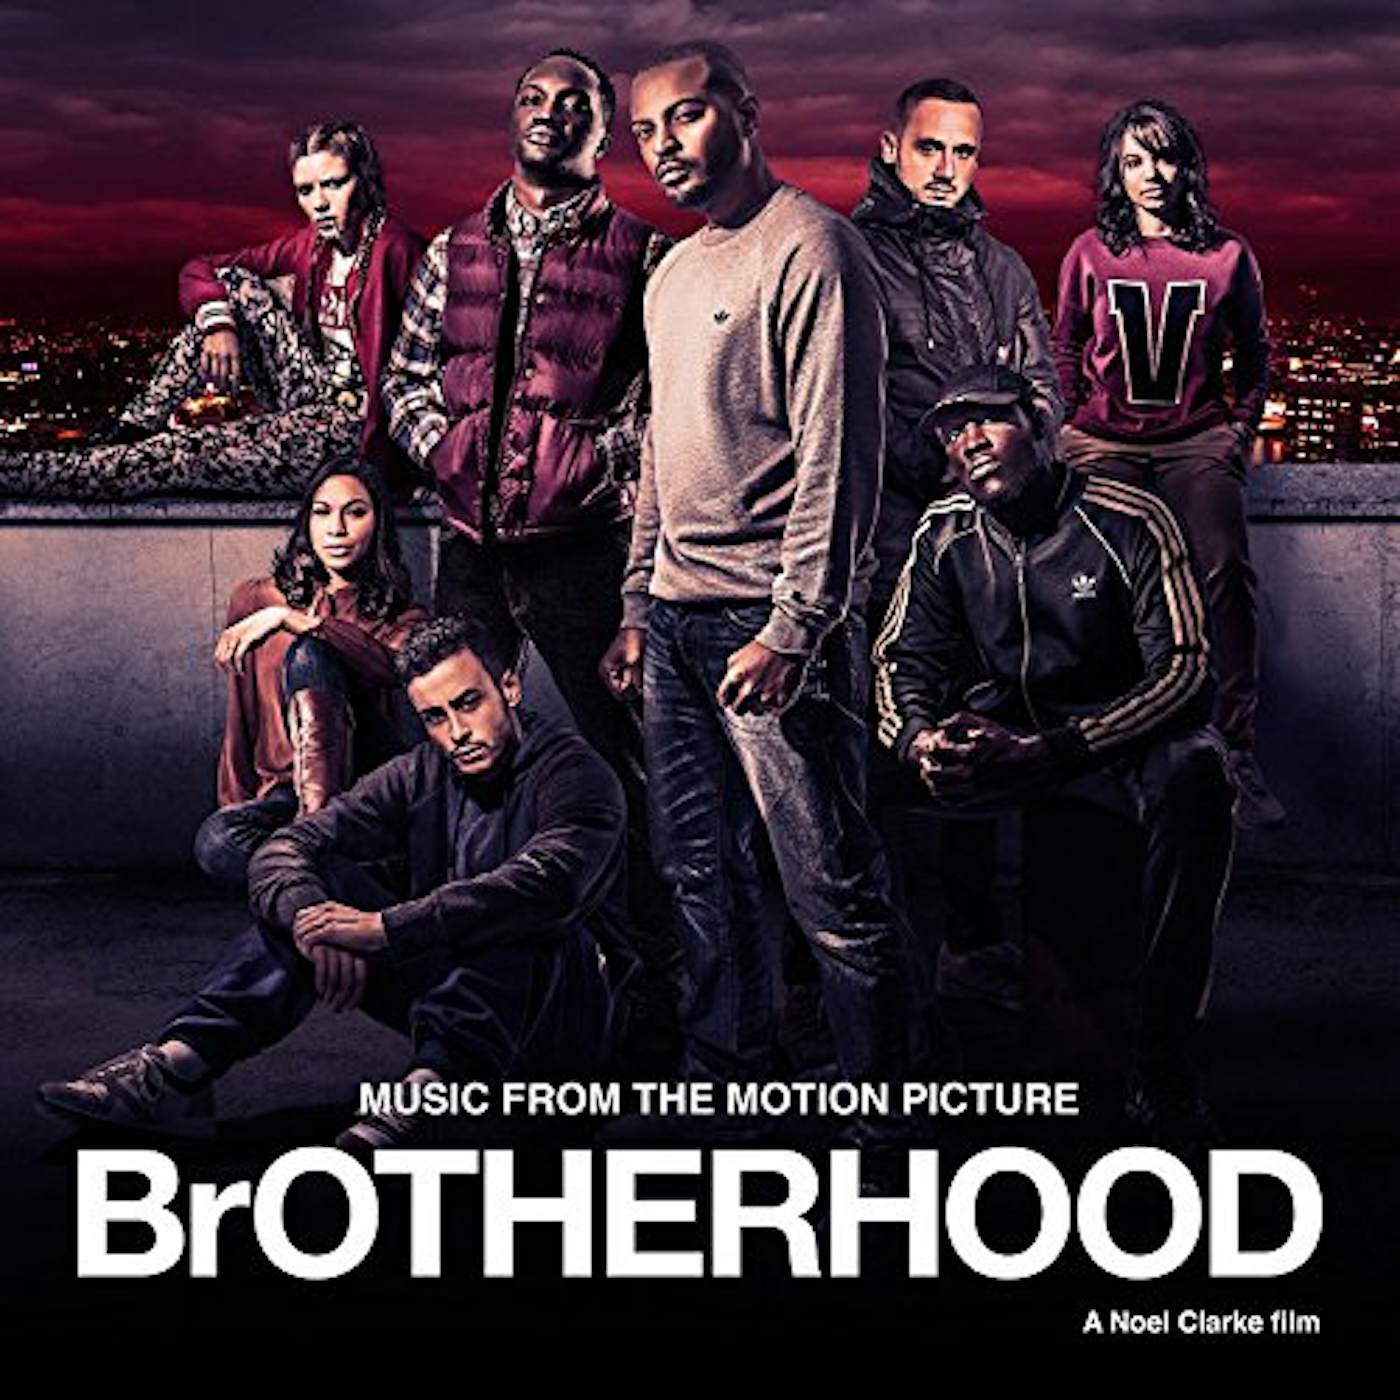 Brotherhood / O.S.T. BROTHERHOOD (A NOEL CLARKE FILM) / Original Soundtrack Vinyl Record